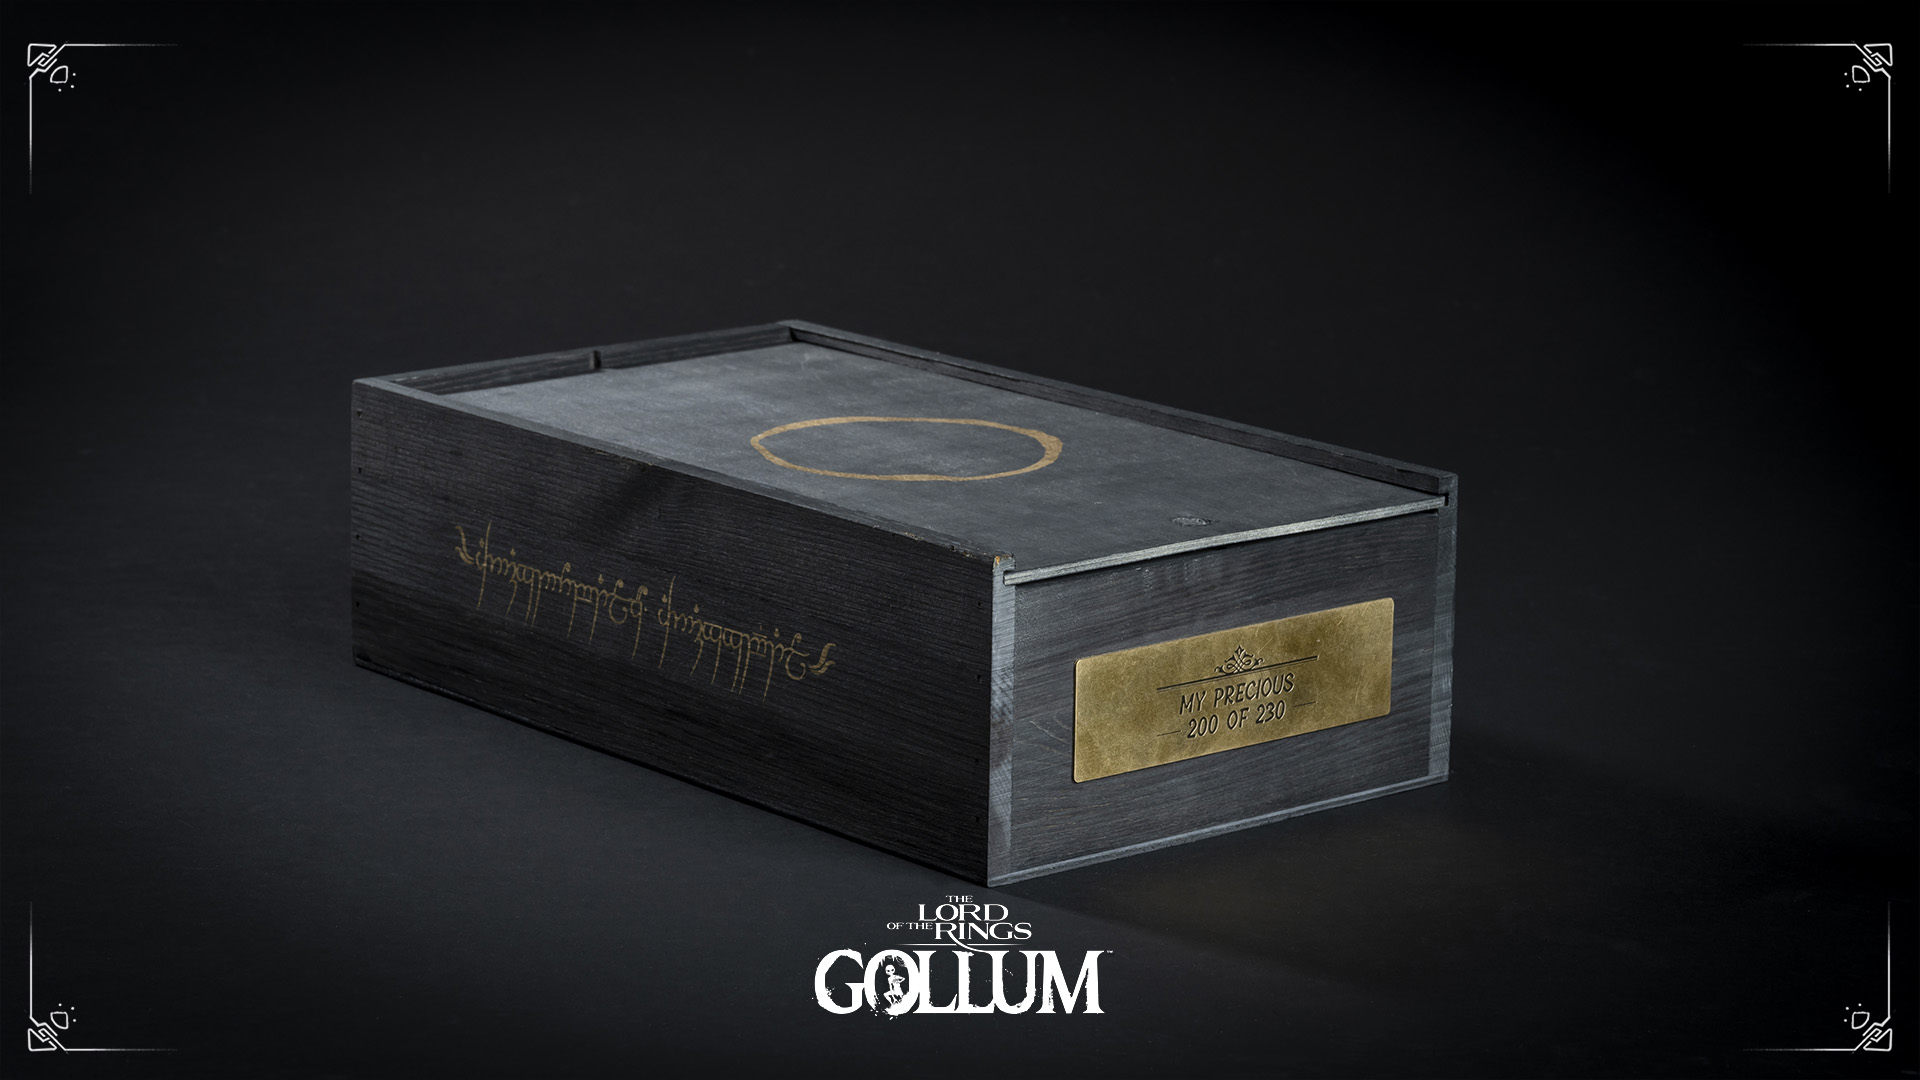 Gollum será protagonista de jogo baseado na obra de J. R. R. Tolkien -  Canaltech